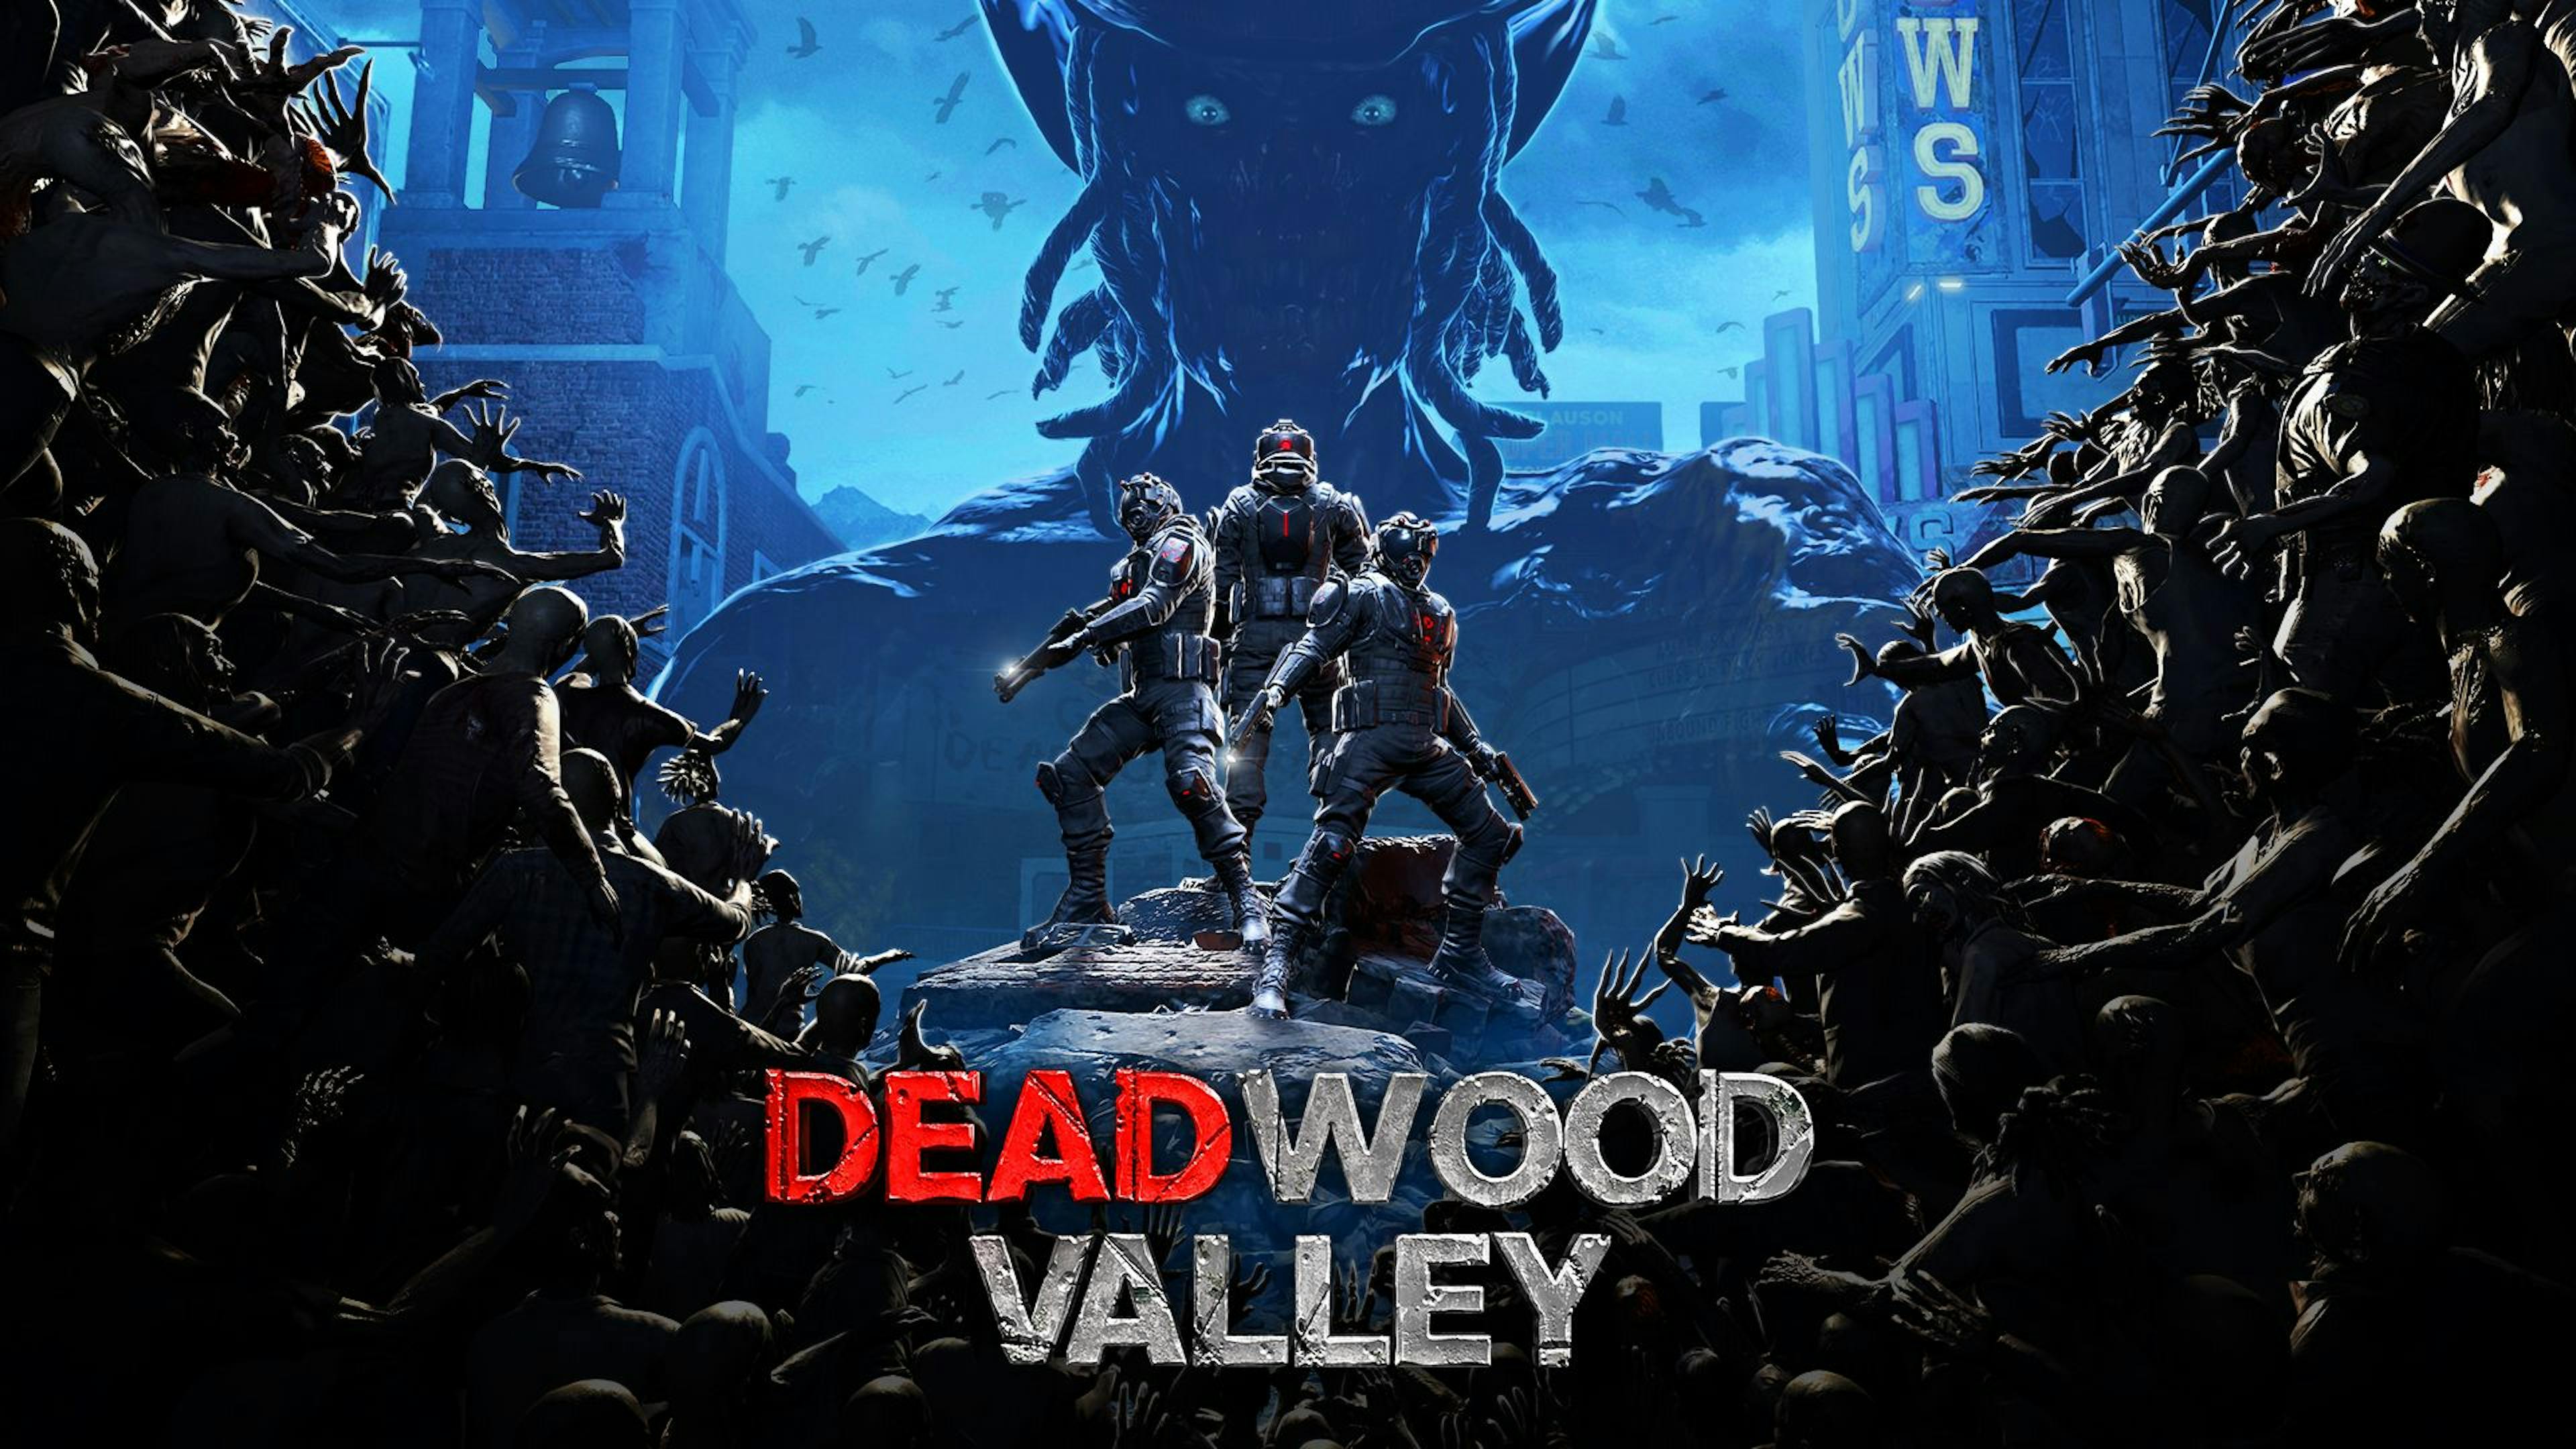 Deadwood Valley